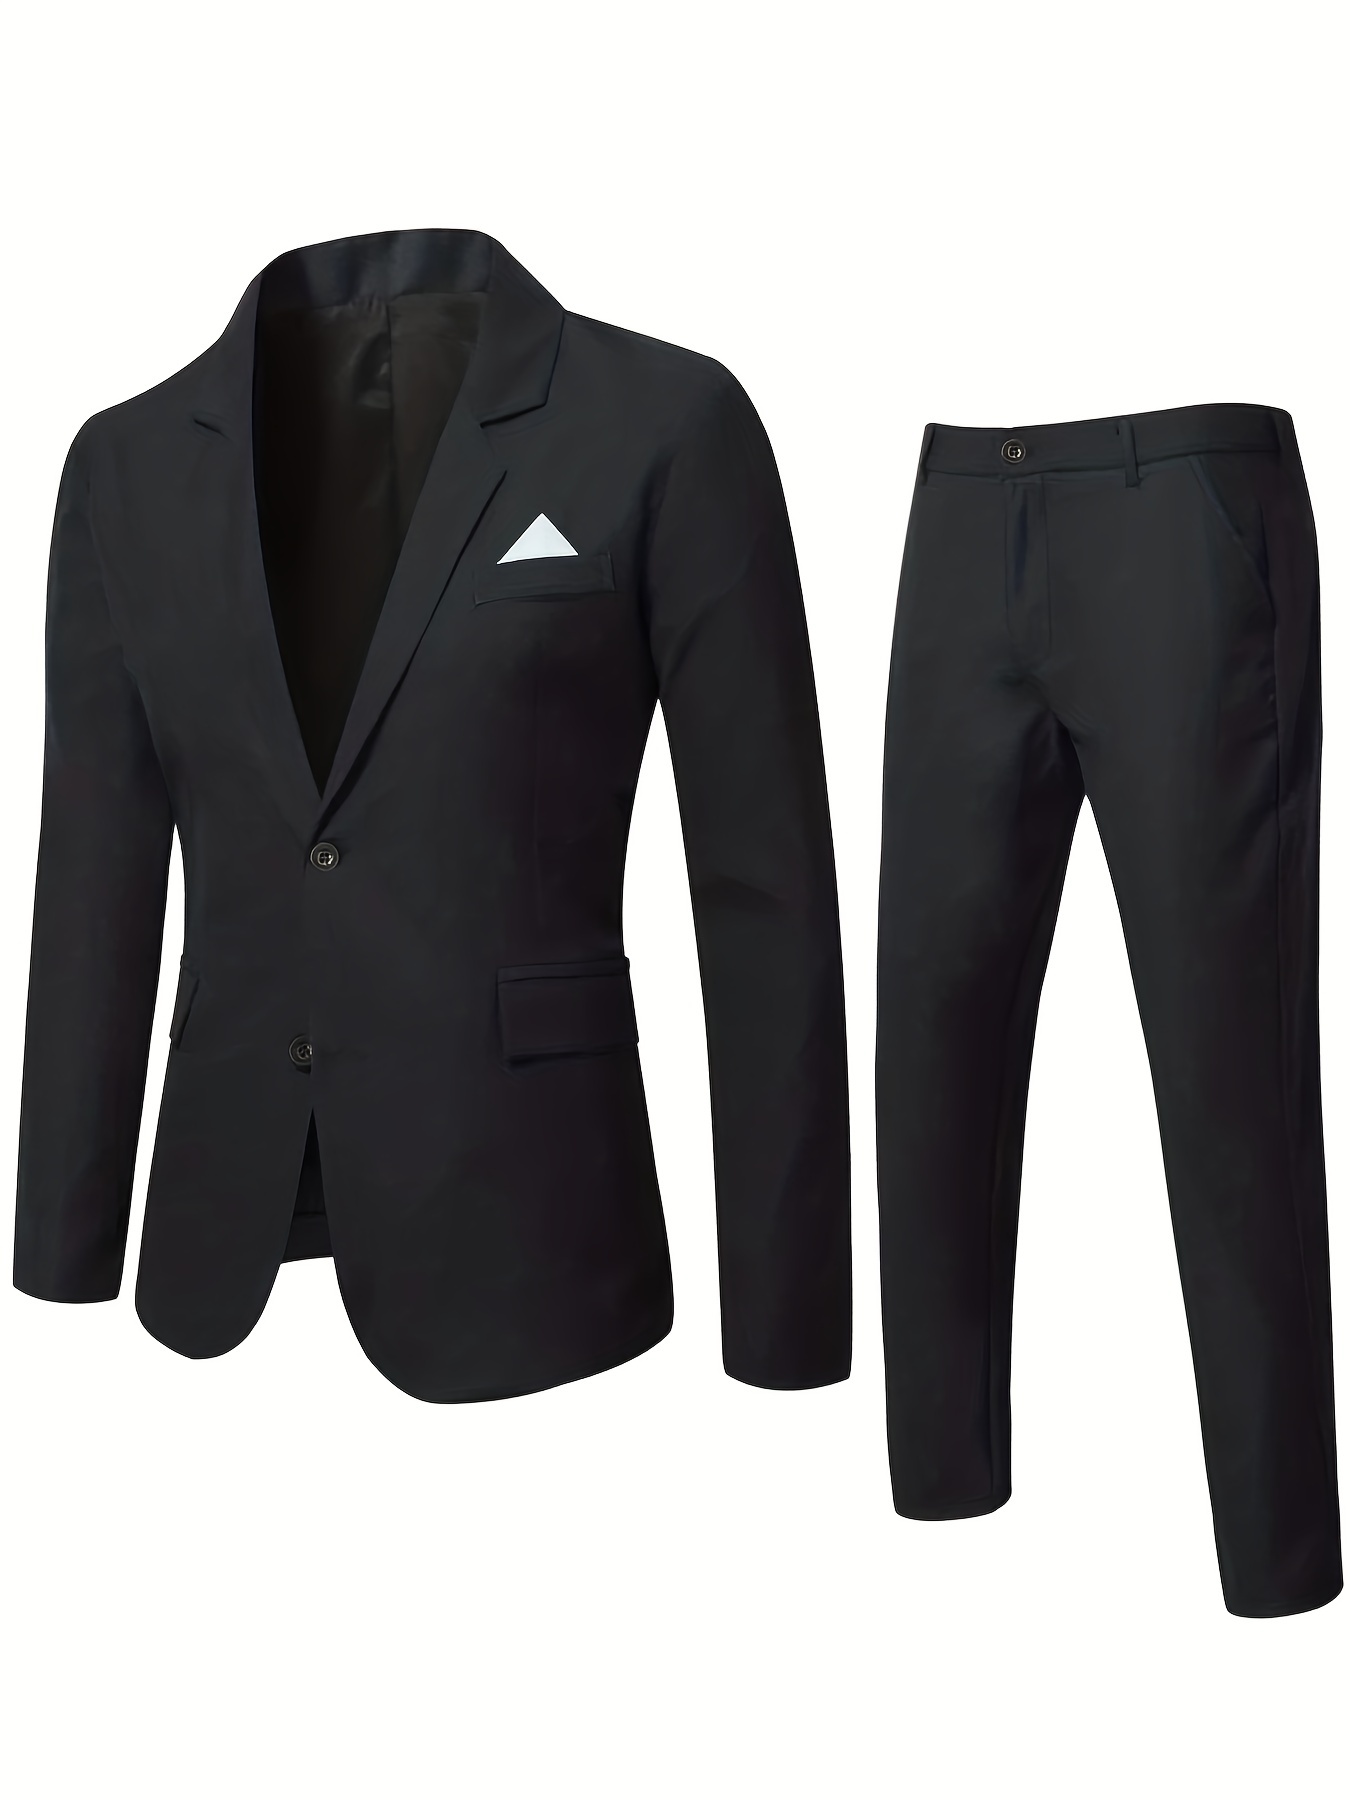 Coat Pant Suit -  Australia